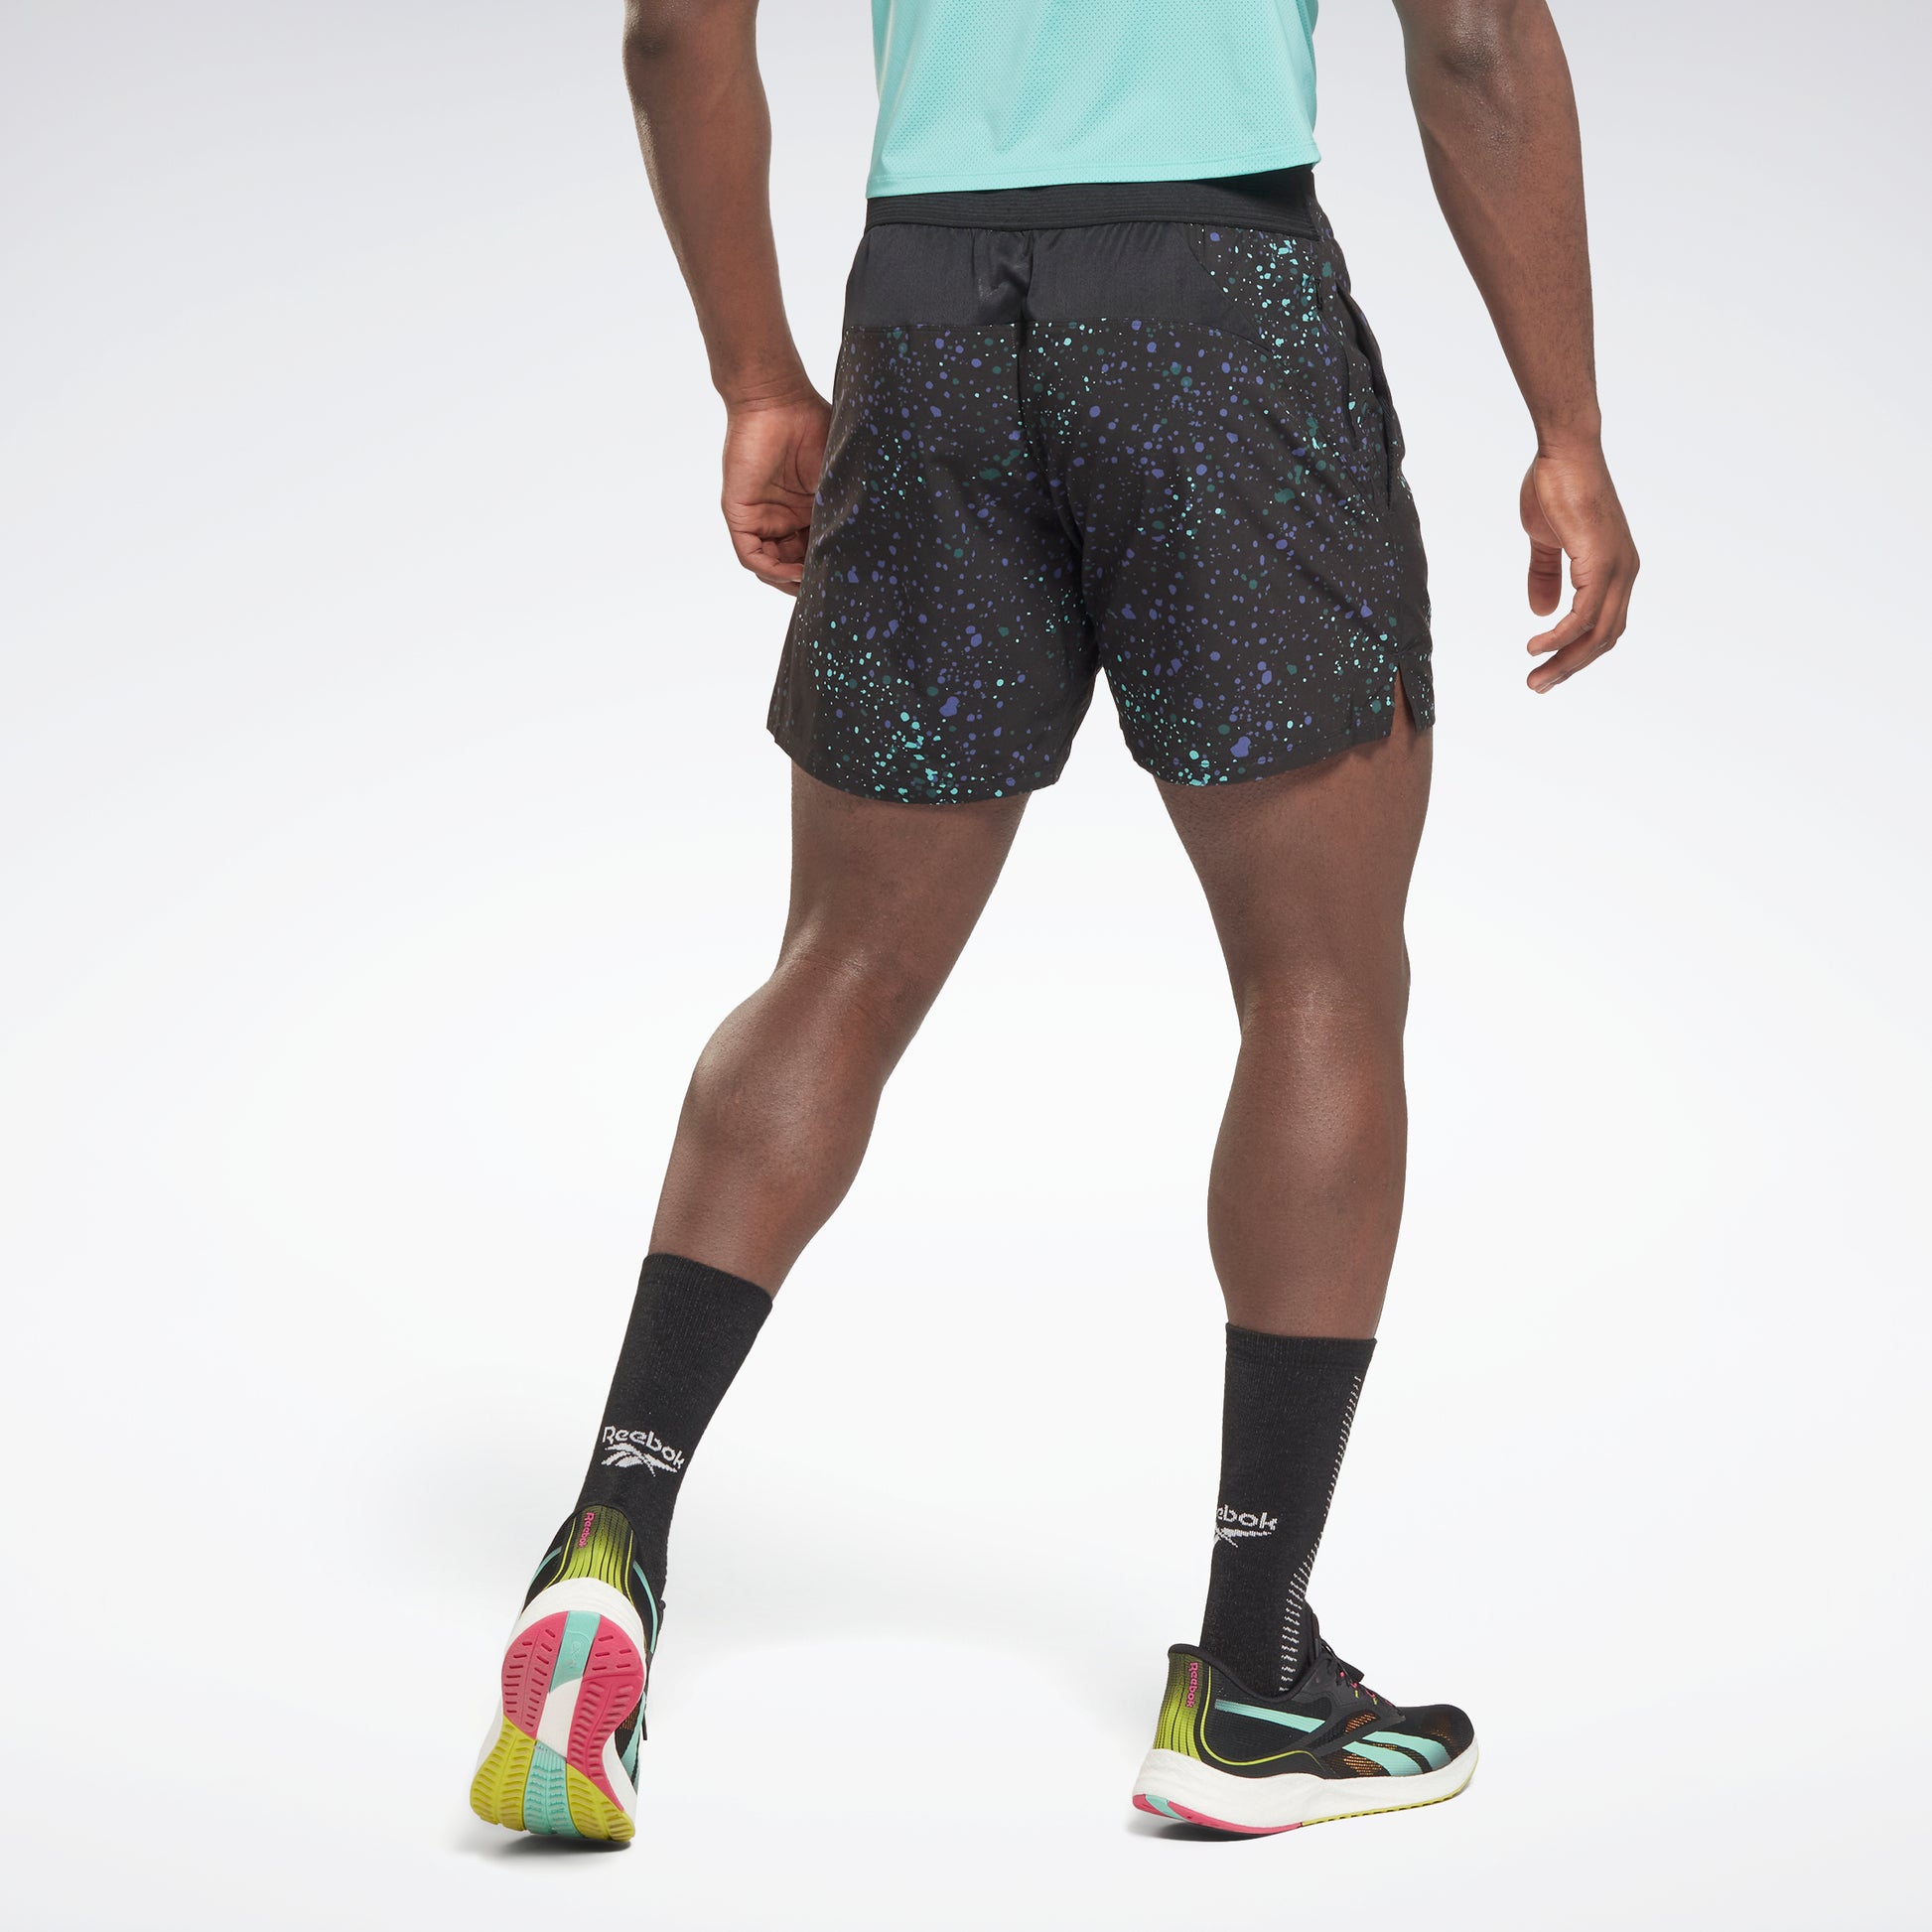 – Black Reebok Australia Allover Print Strength Shorts